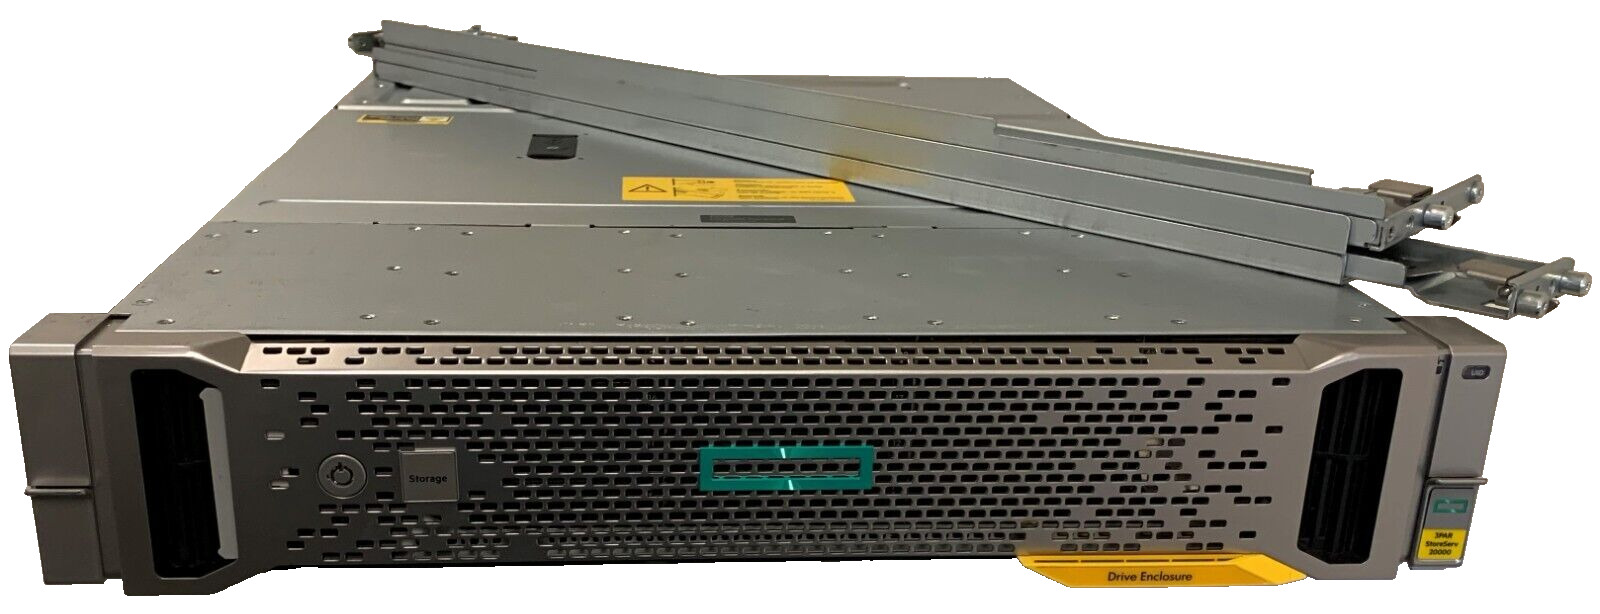 HPE 3PAR StoreServ 20000 Disk Array Enclosure  E7Y15-63002, 2x P/S and RM